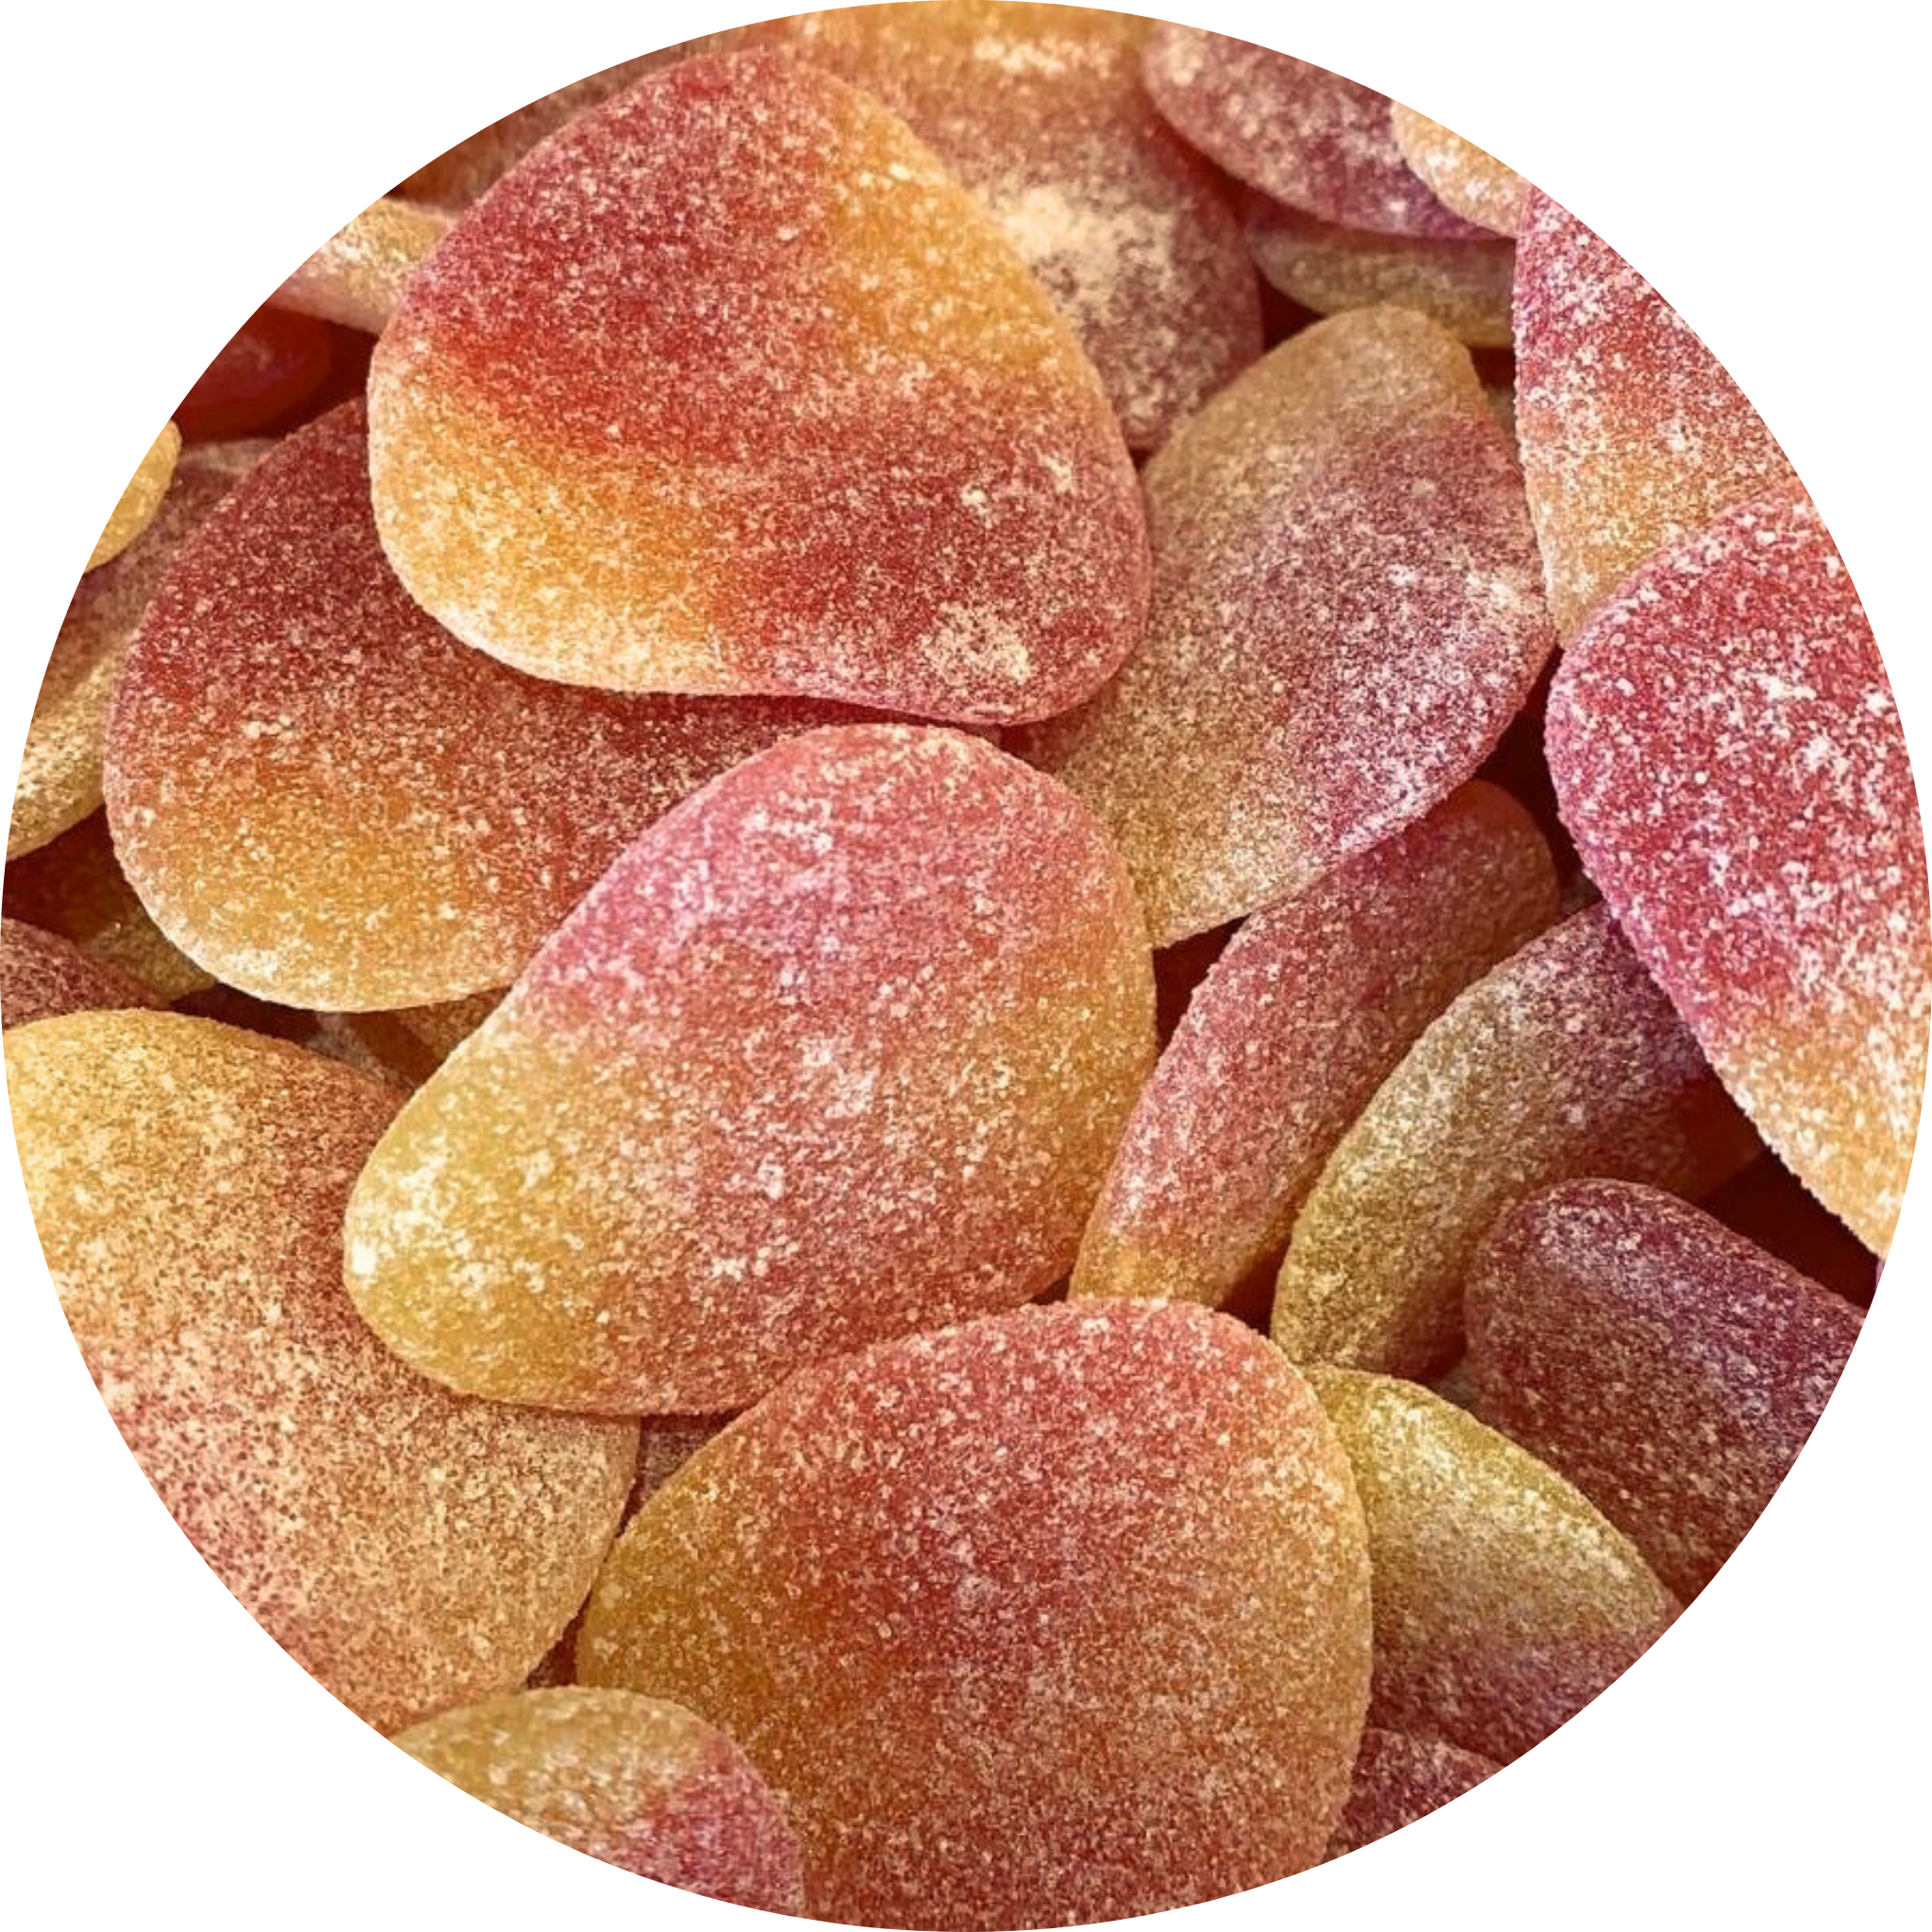 HHC Gummies I Happy Peaches